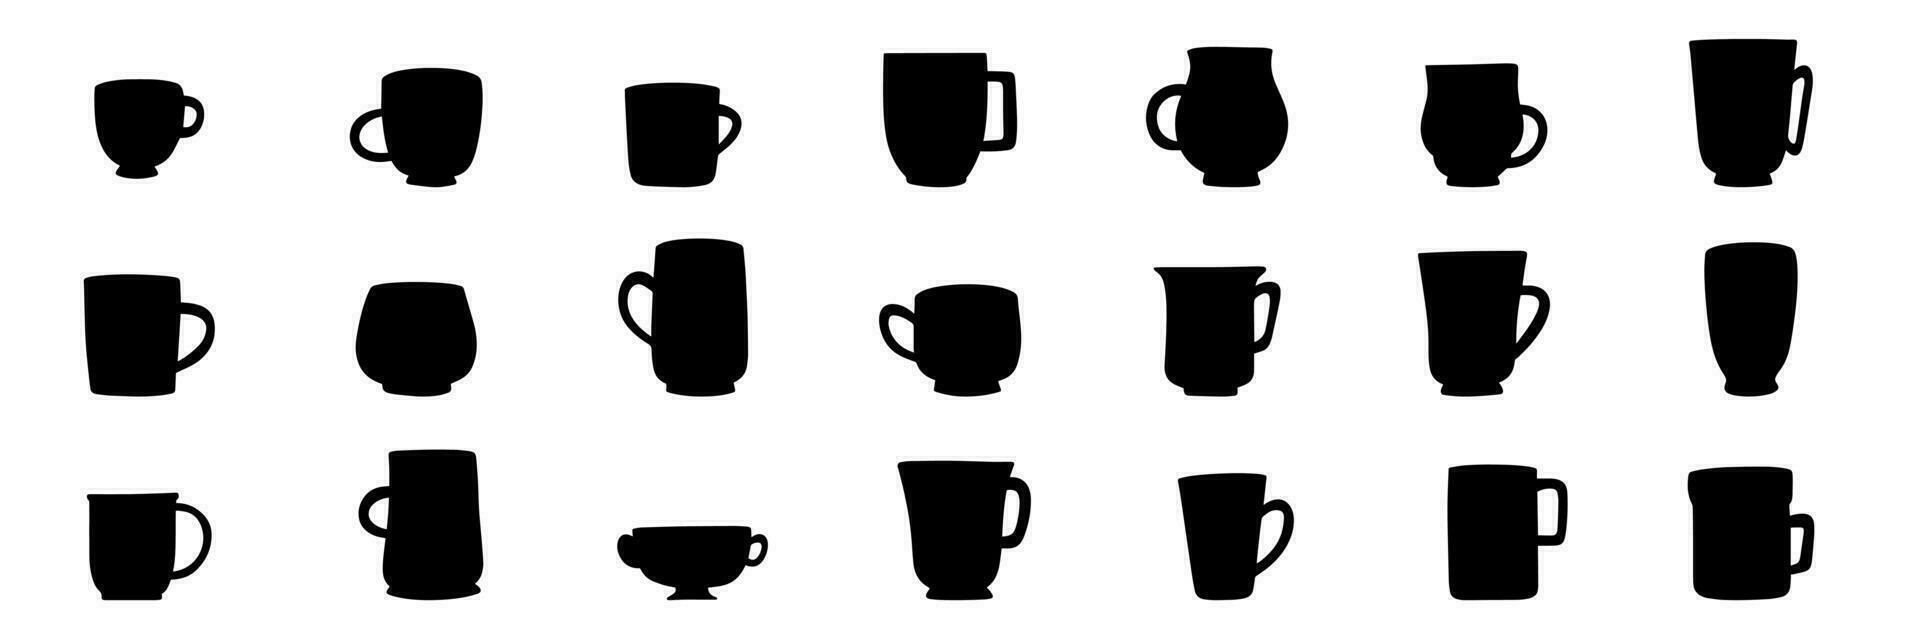 conjunto de tazas silueta. mano dibujado silueta de tazas grande colección de taza o jarra silueta. vector ilustración